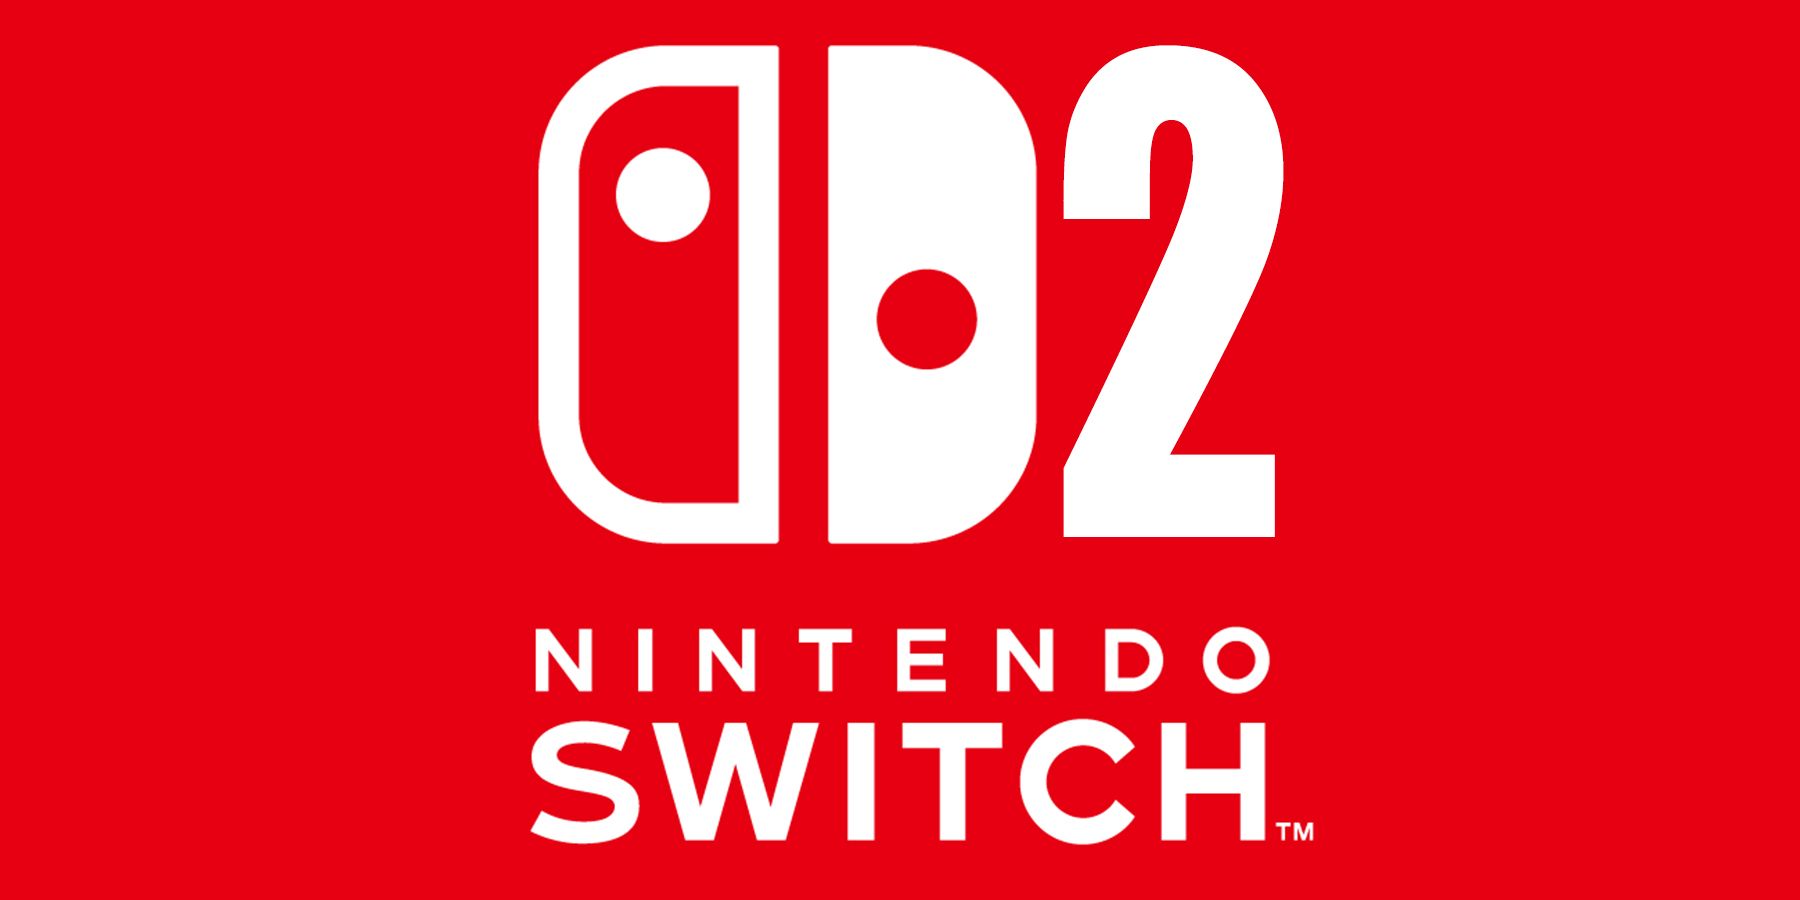 Nintendo Switch 2 mockup logo red